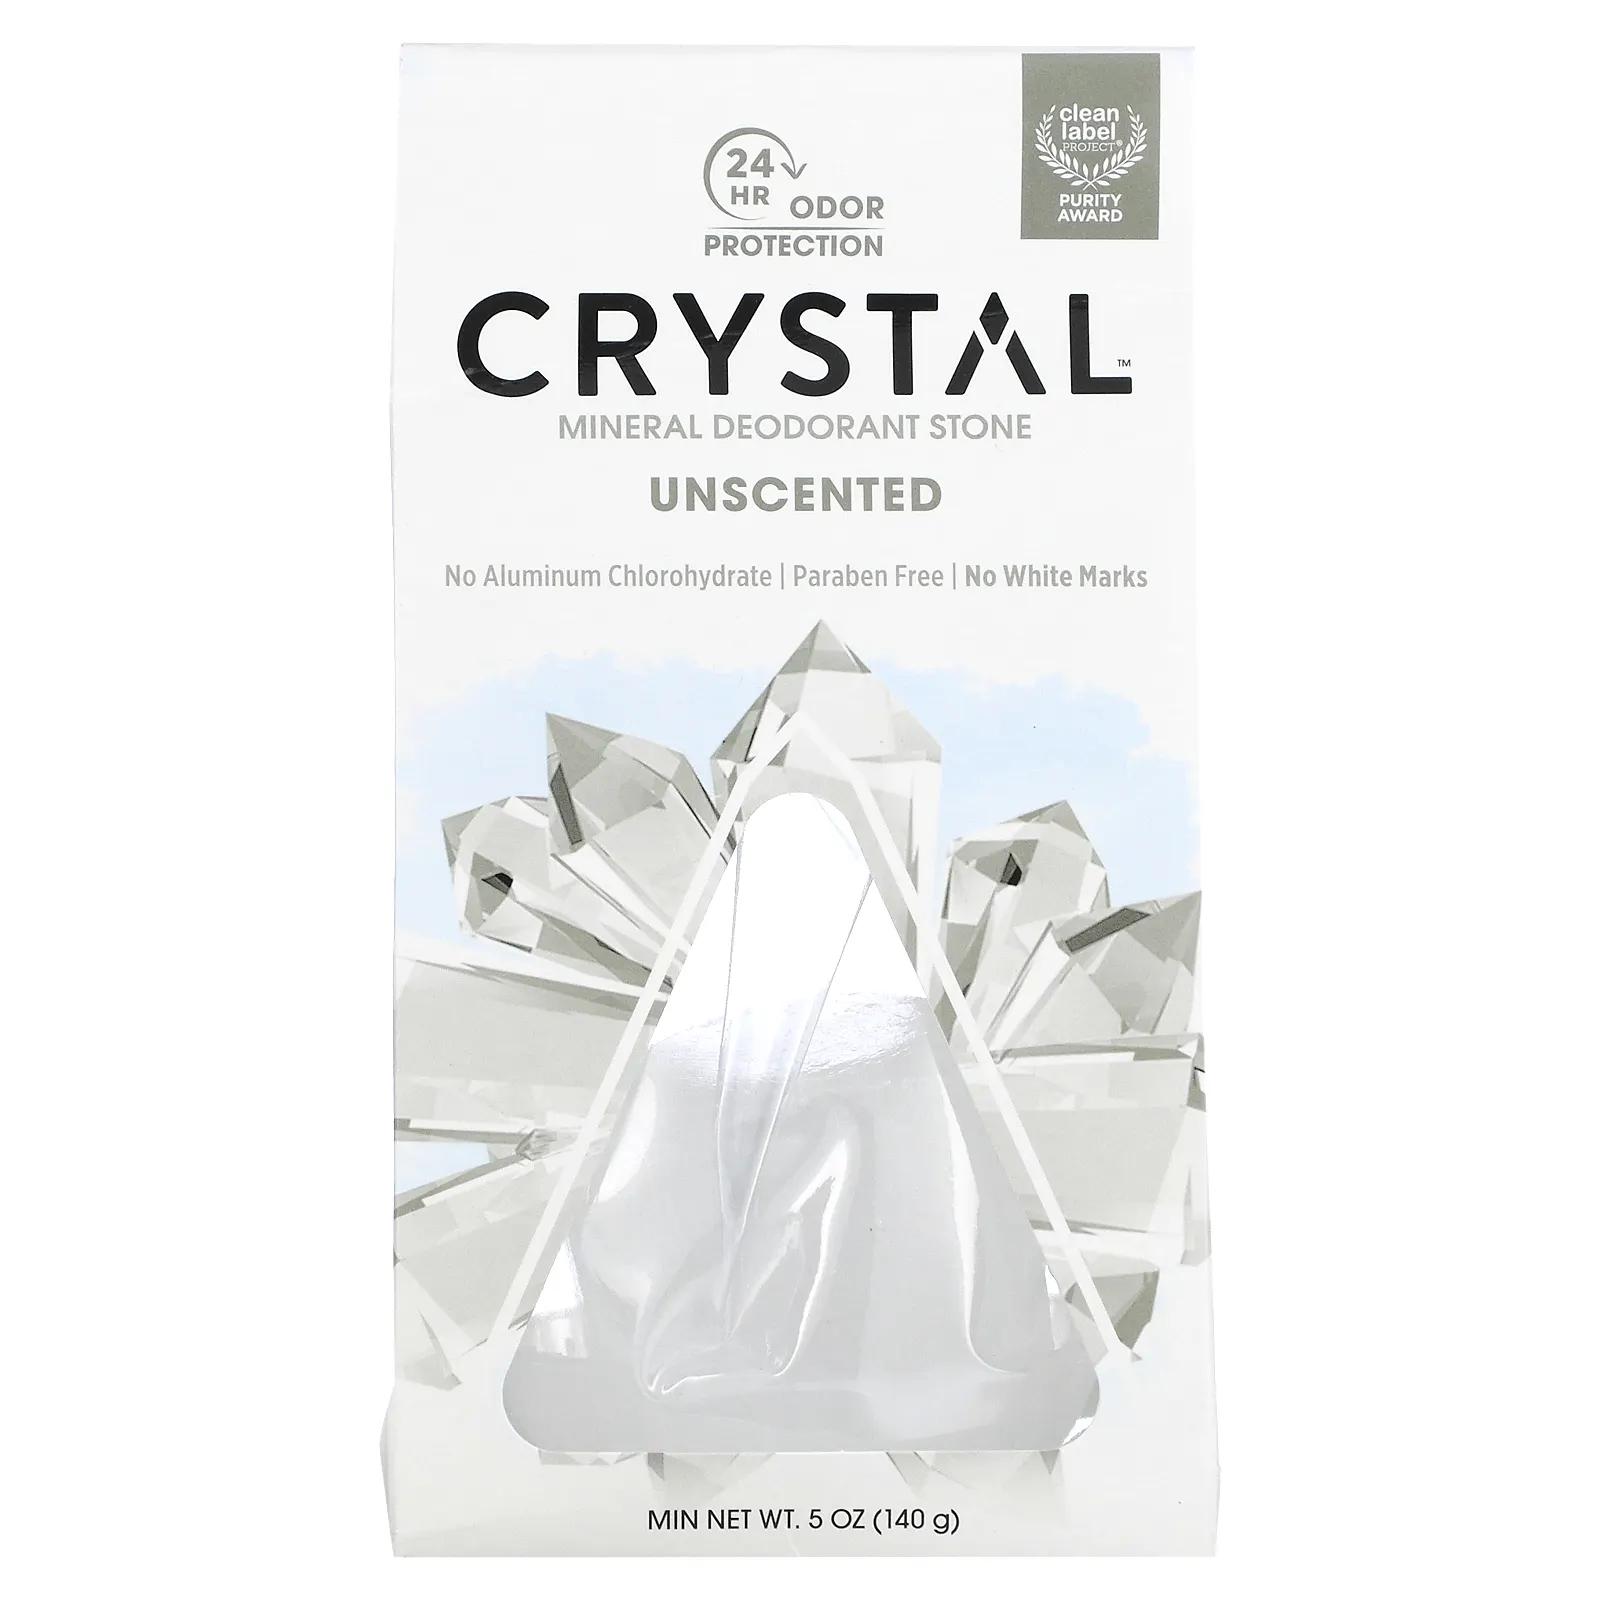 Crystal Body Deodorant Mineral Deodorant Stone Unscented 5 oz (140 g)